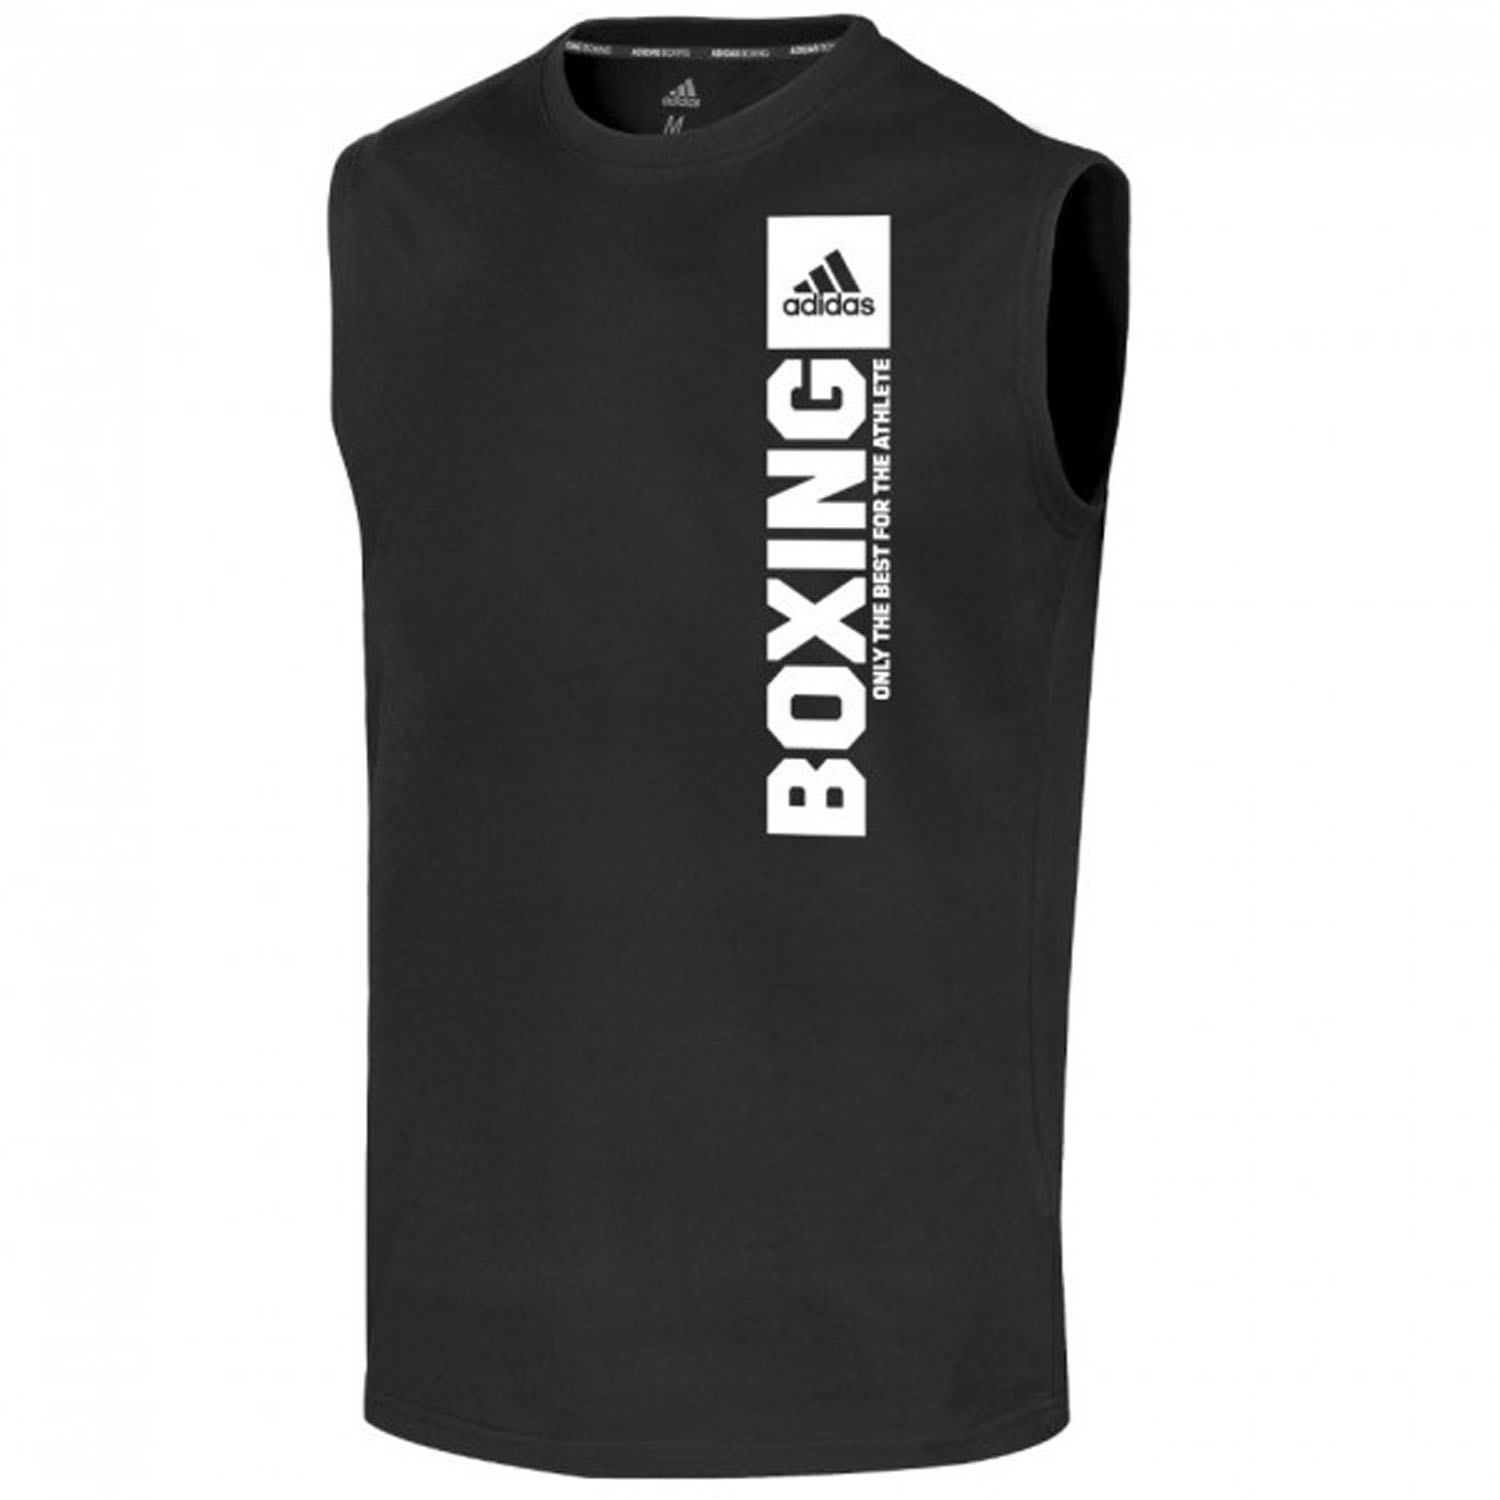 adidas Sleeveless T-Shirt, Community Vertical Boxing, schwarz, S